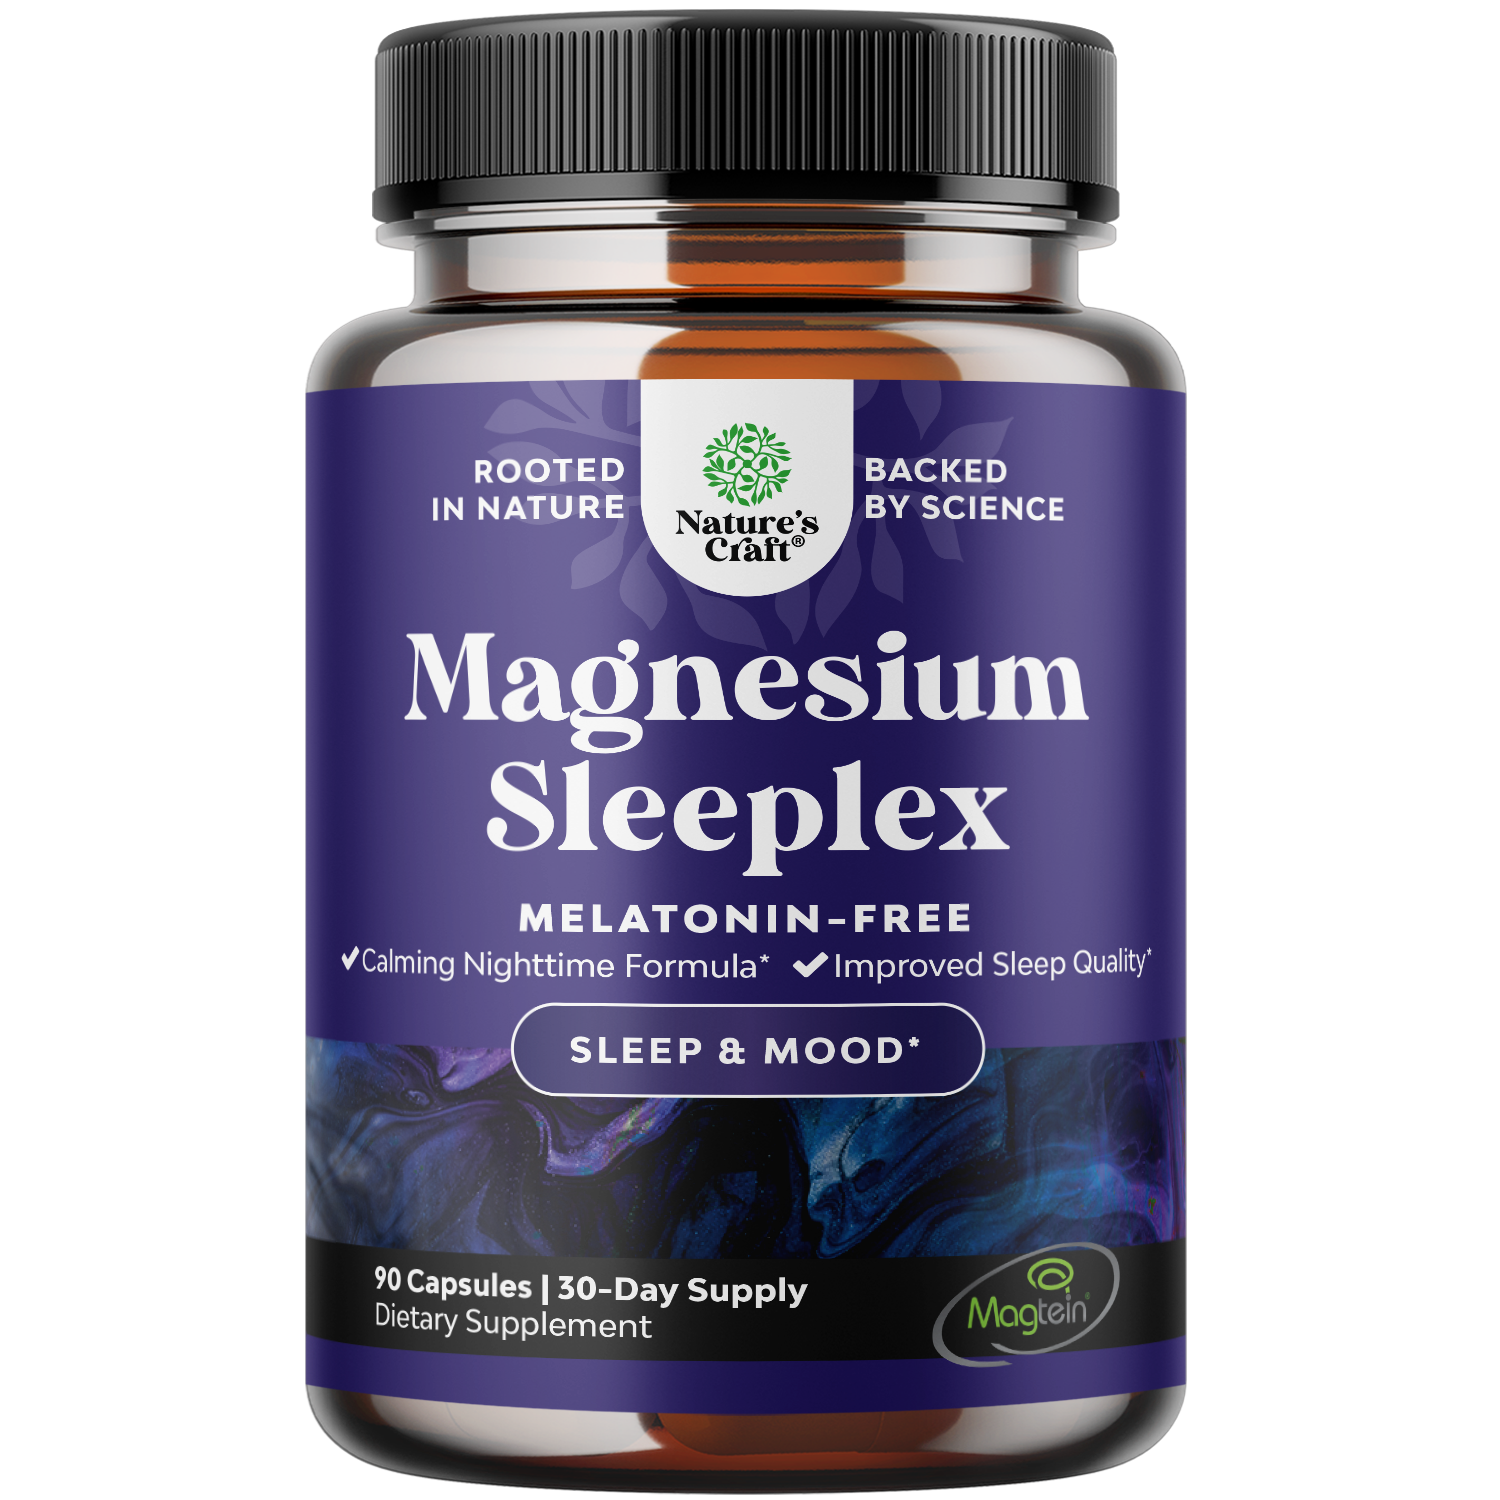 Magnesium Sleeplex 1000mg per serving